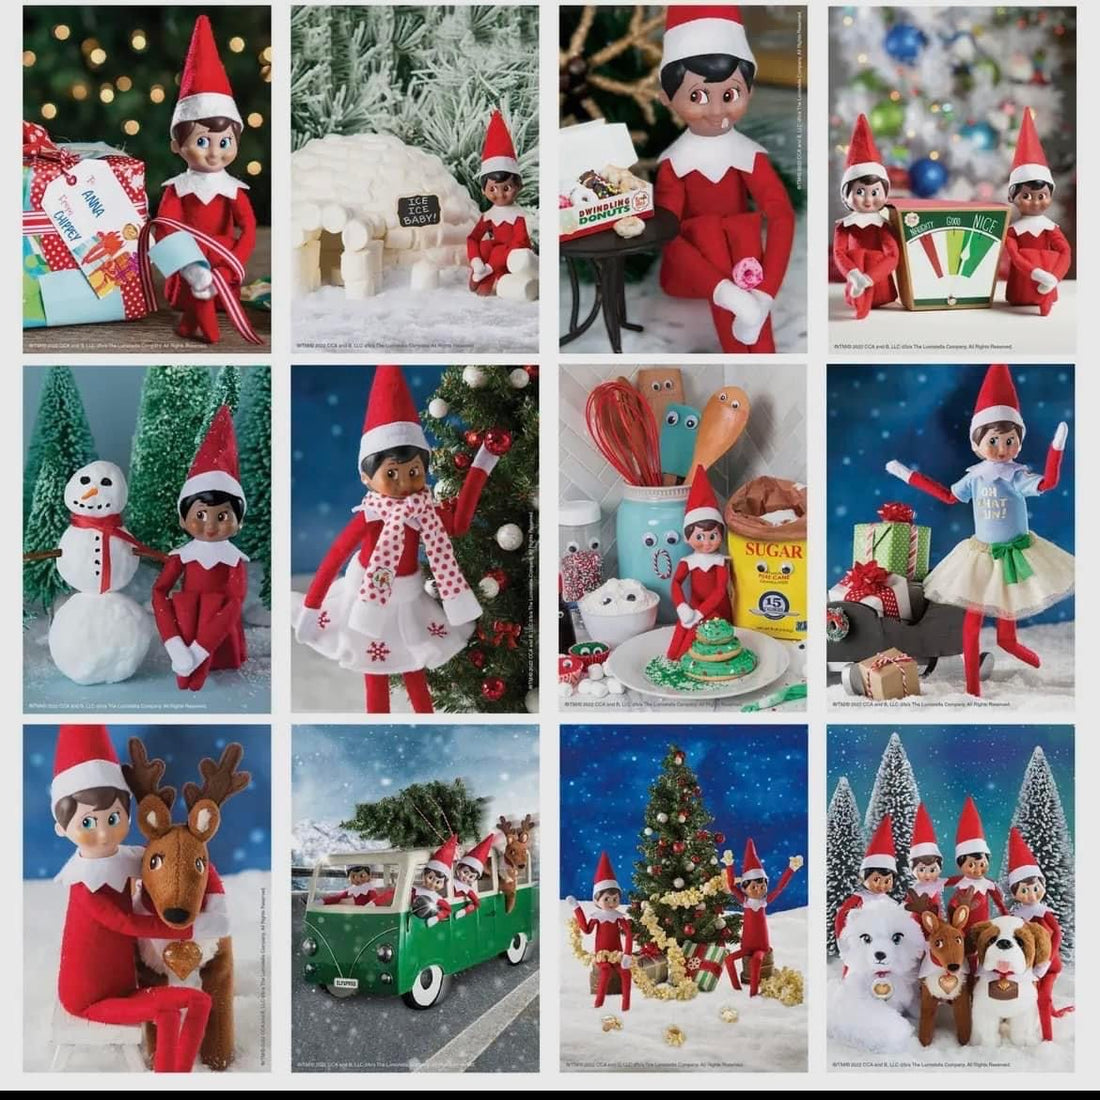 12 Day Puzzle Advent Calendar - Elf on the Shelf